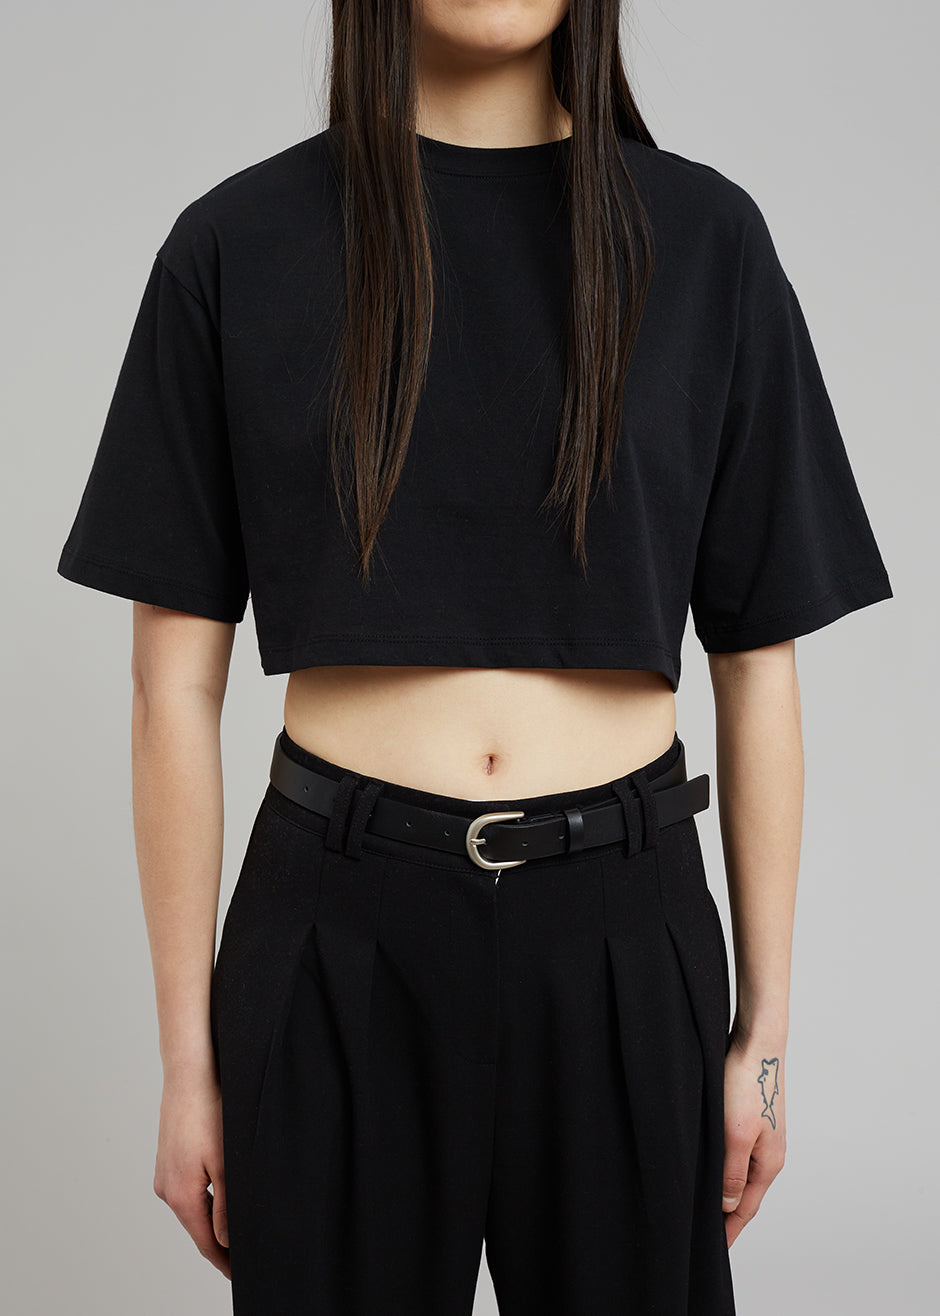 Karina Cropped T-Shirt - Black - 3